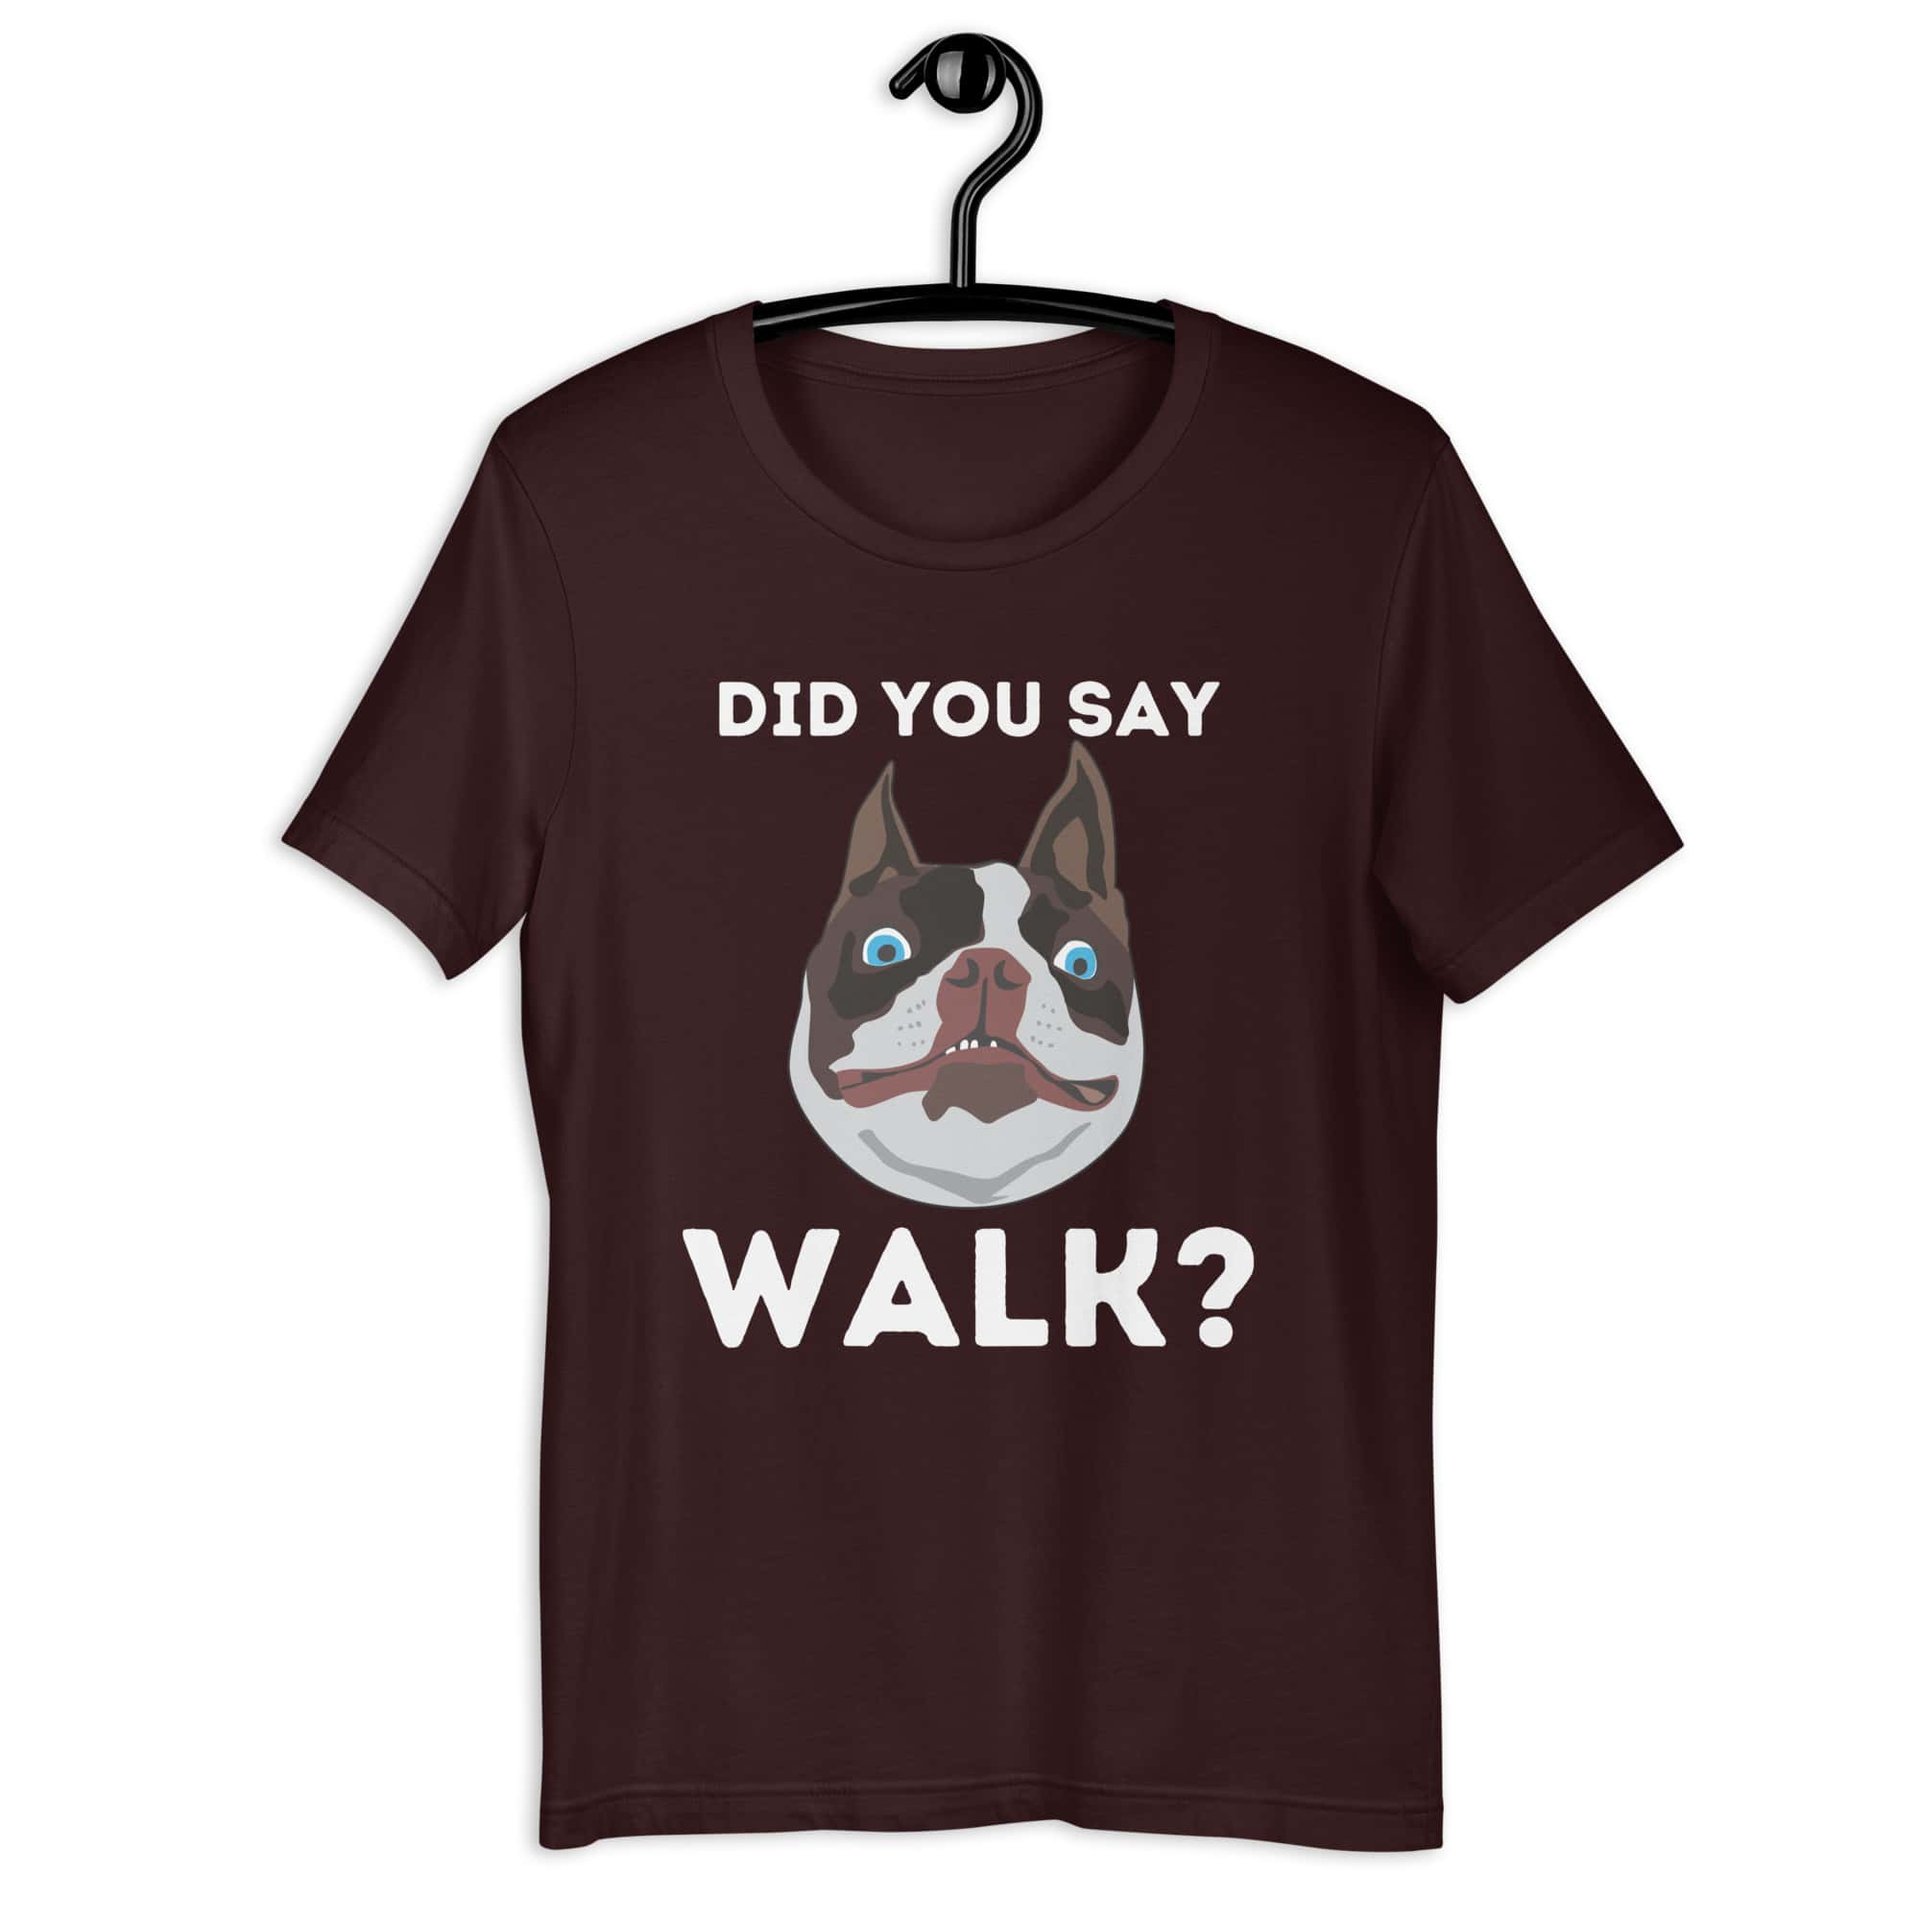 "Did You Say Walk?" Funny Dog Unisex T-Shirt. Oxblood Black